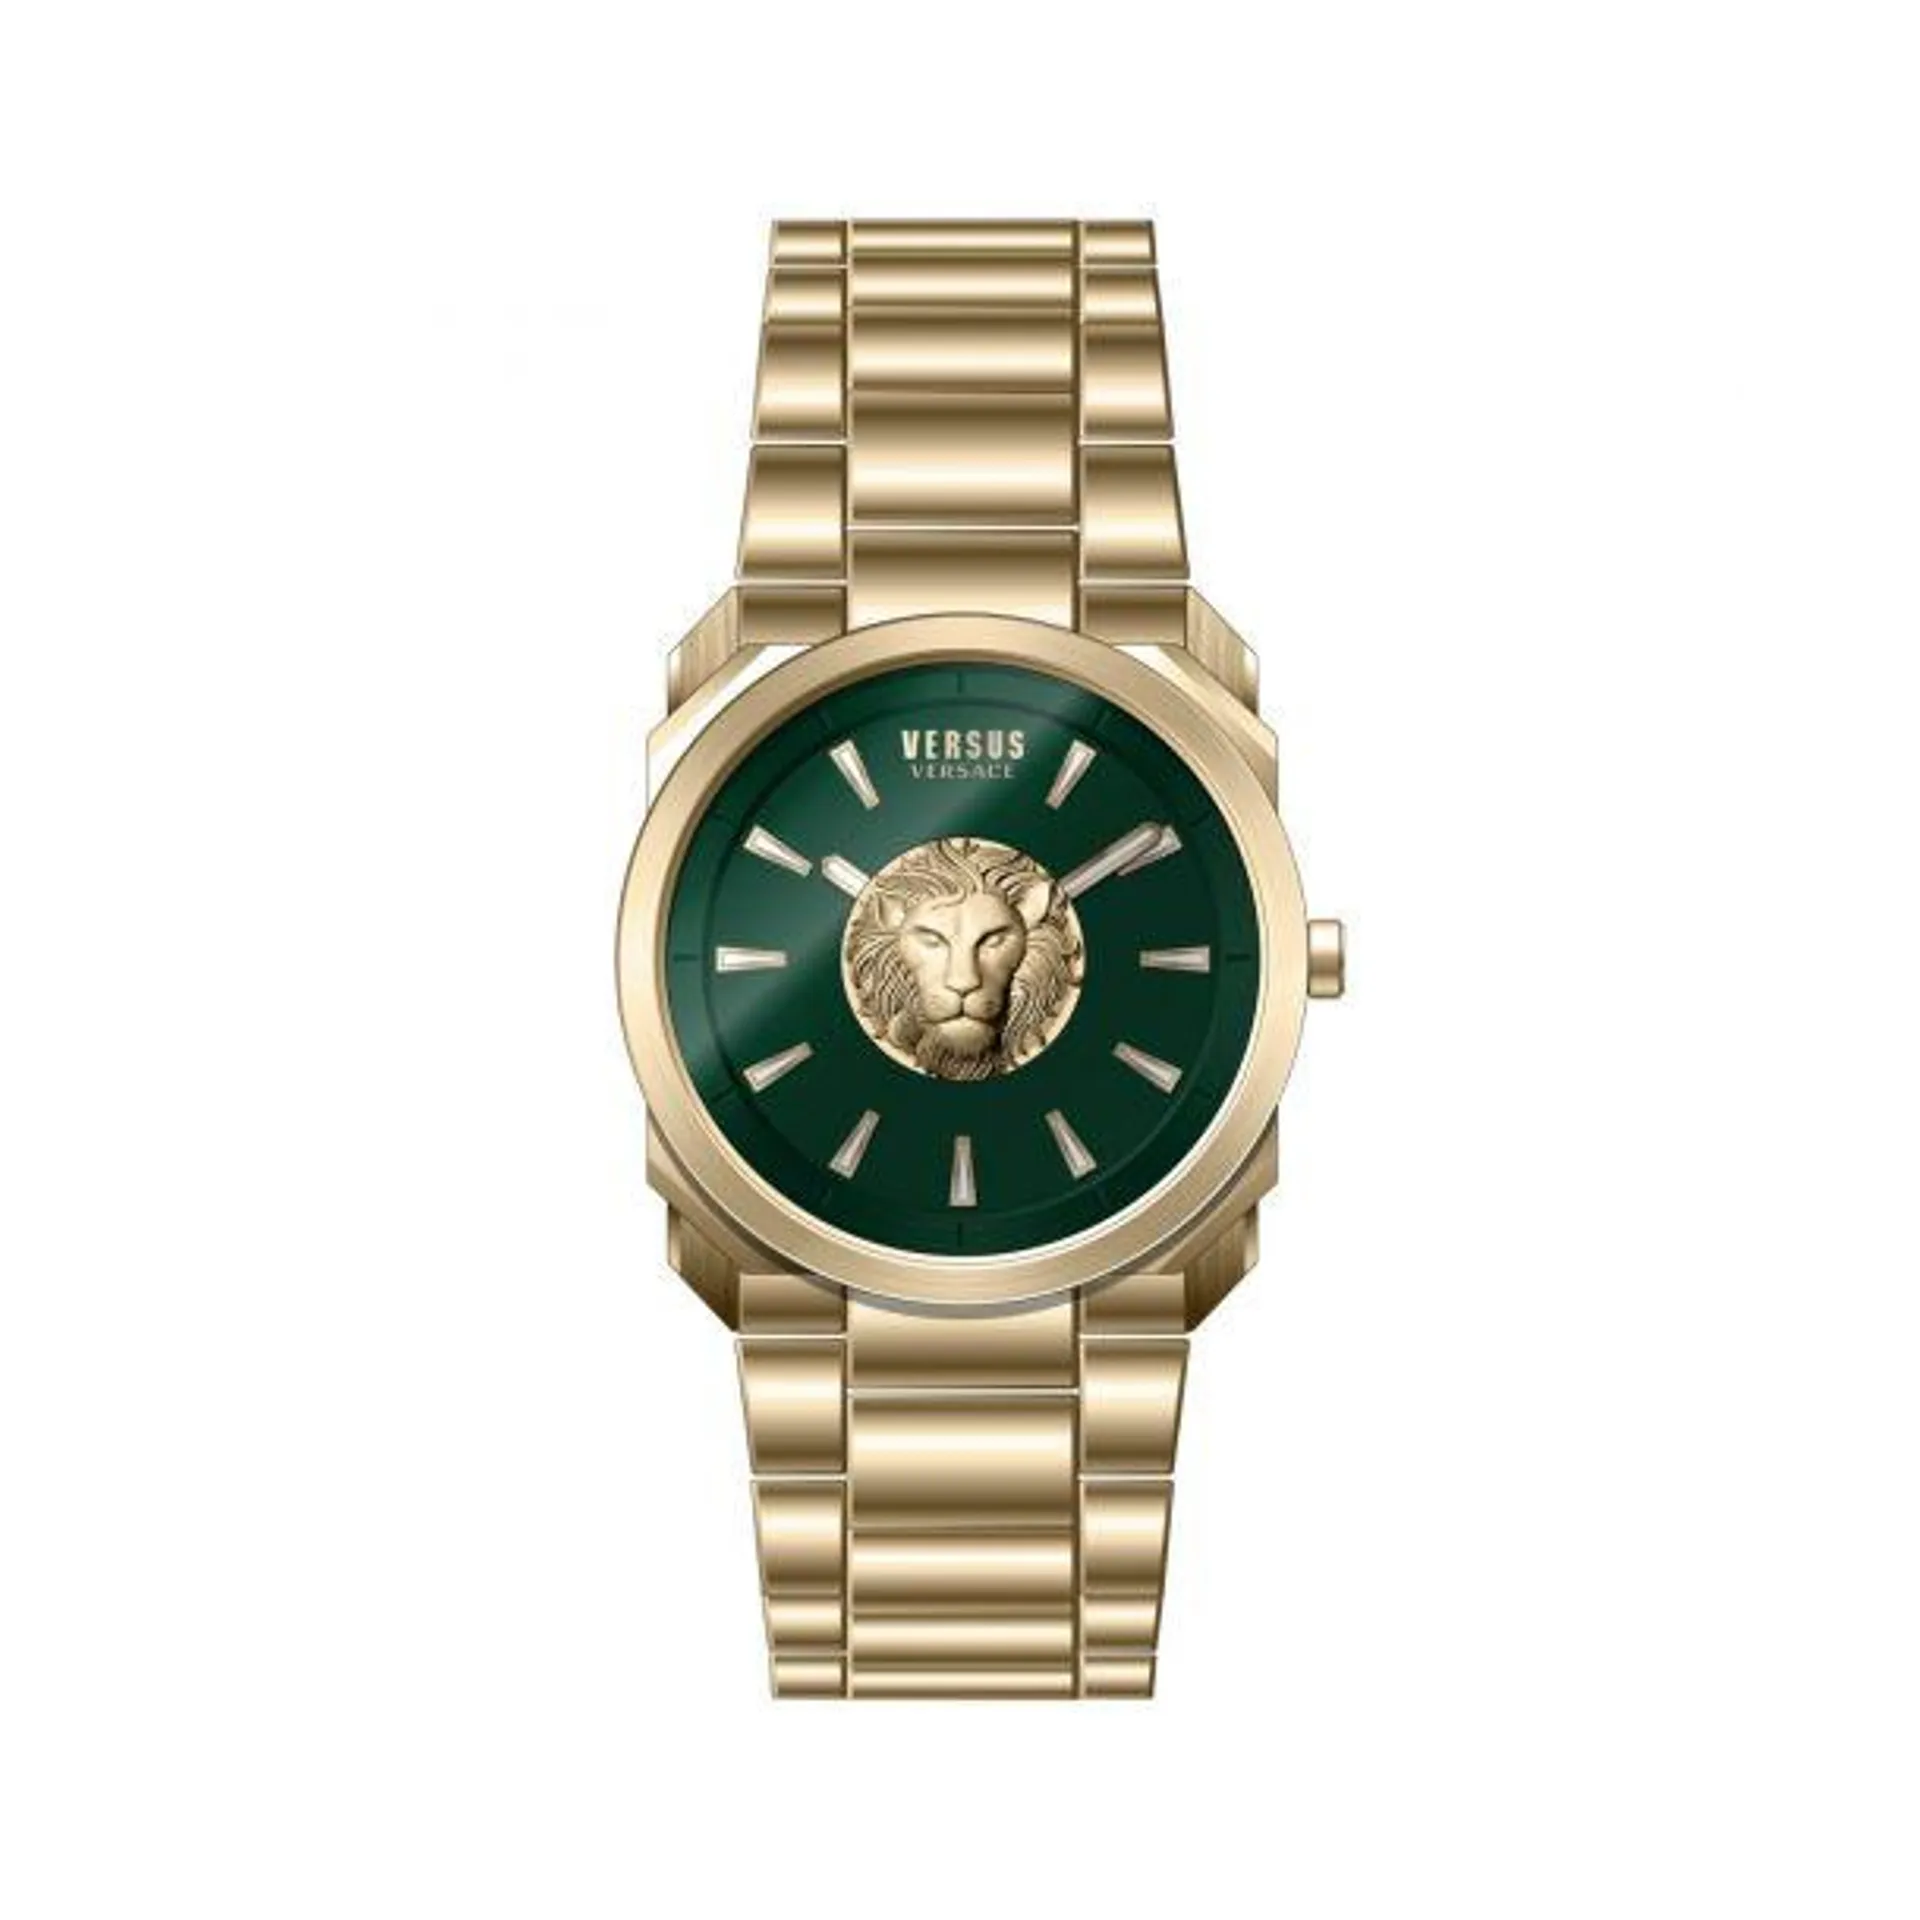 Versus Versace 902 Men's 40mm Quartz Stainless Steel Gold Bracelet Watch - Green Dial